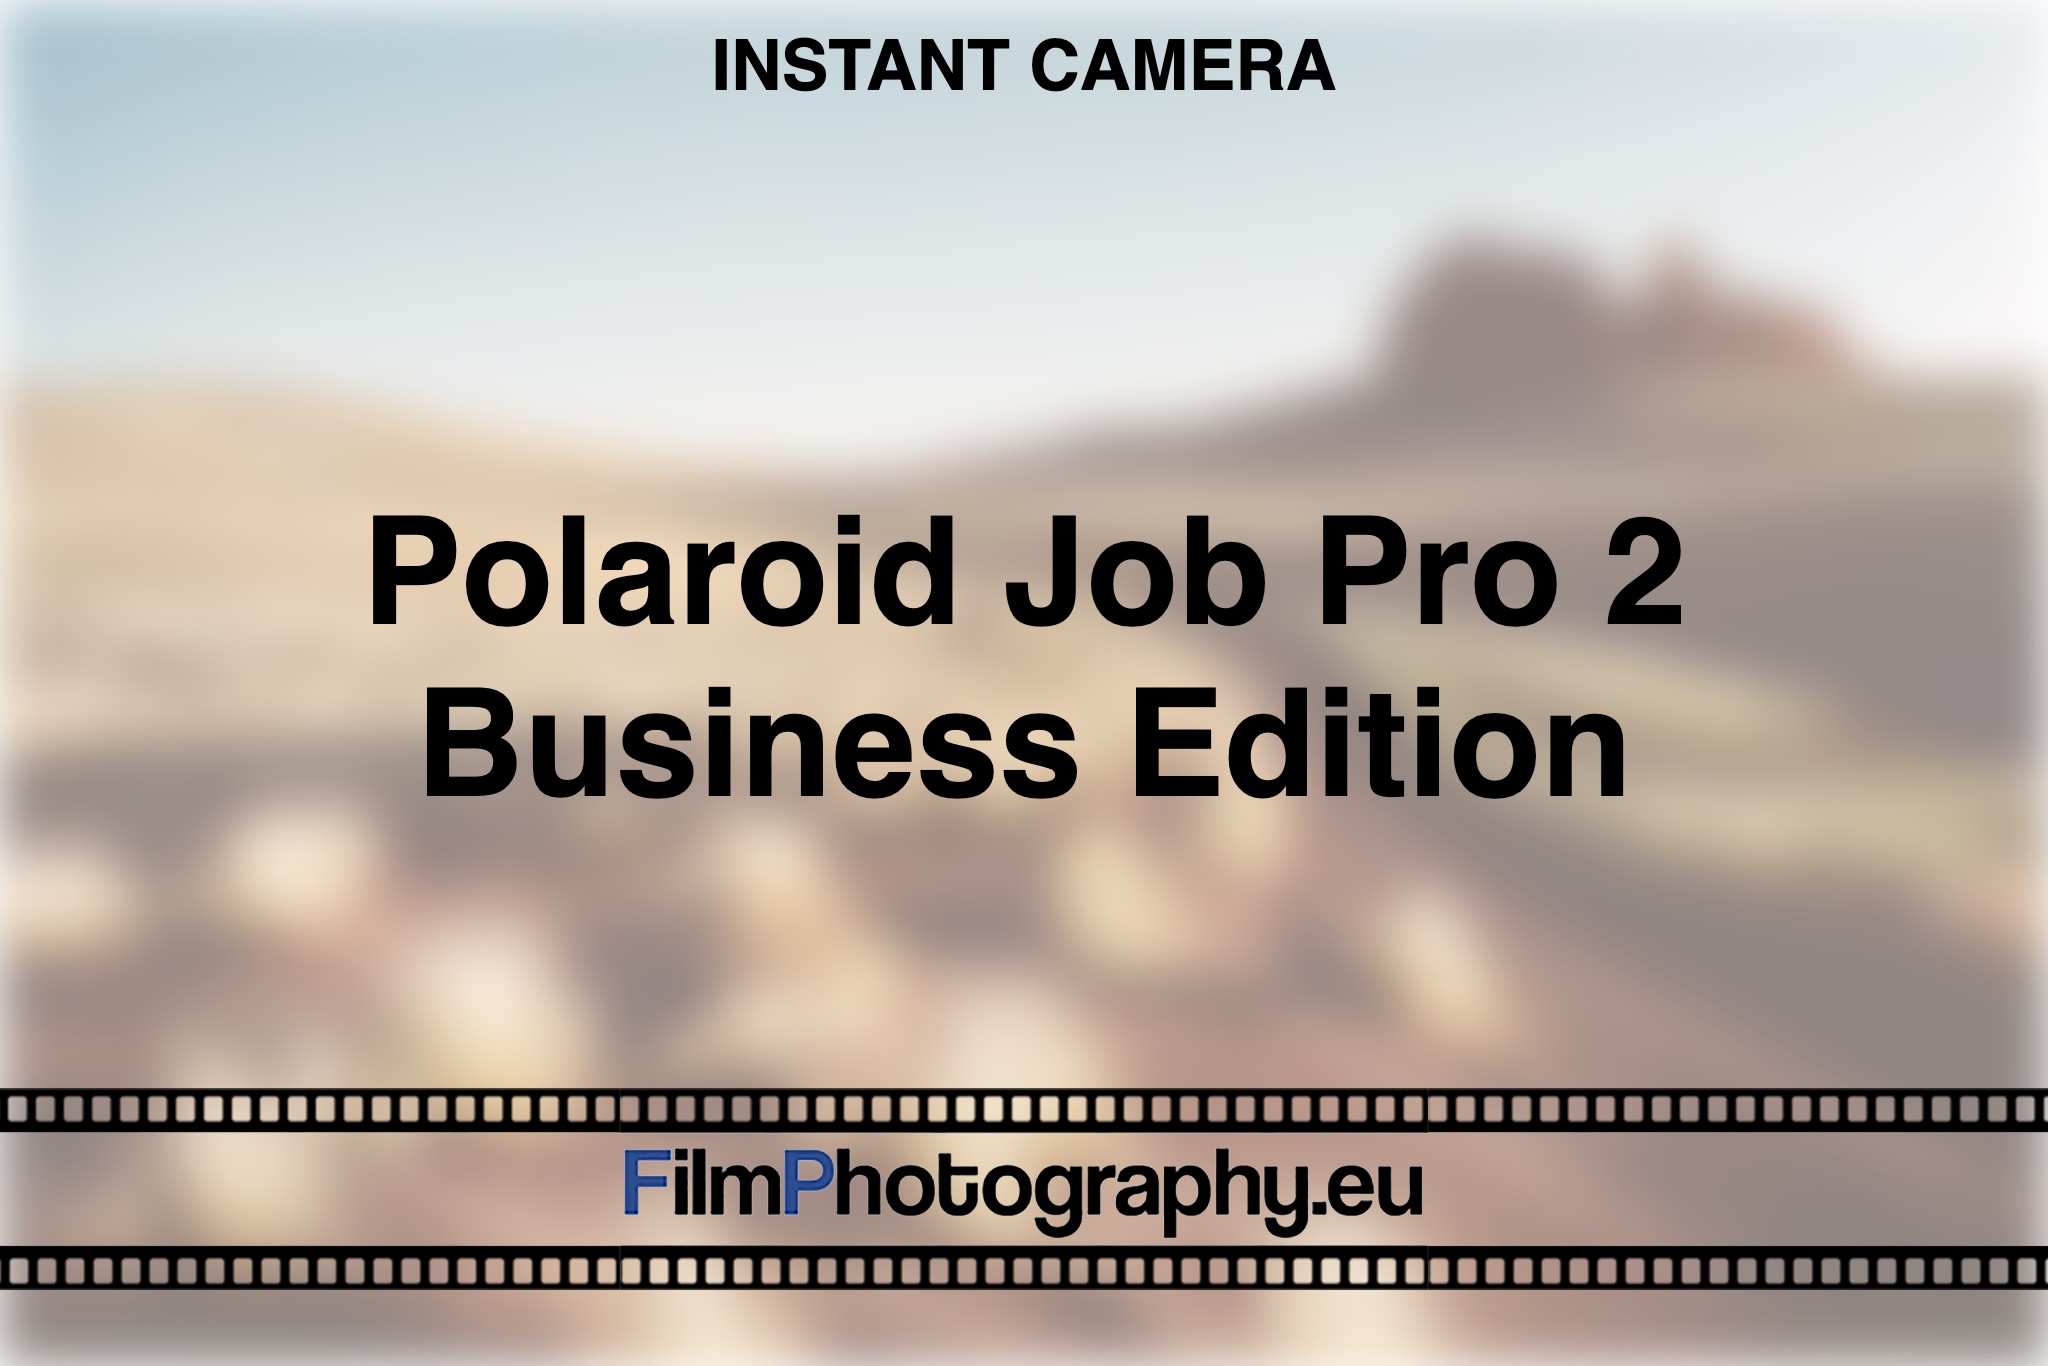 polaroid-job-pro-2-business-edition-instant-camera-bnv